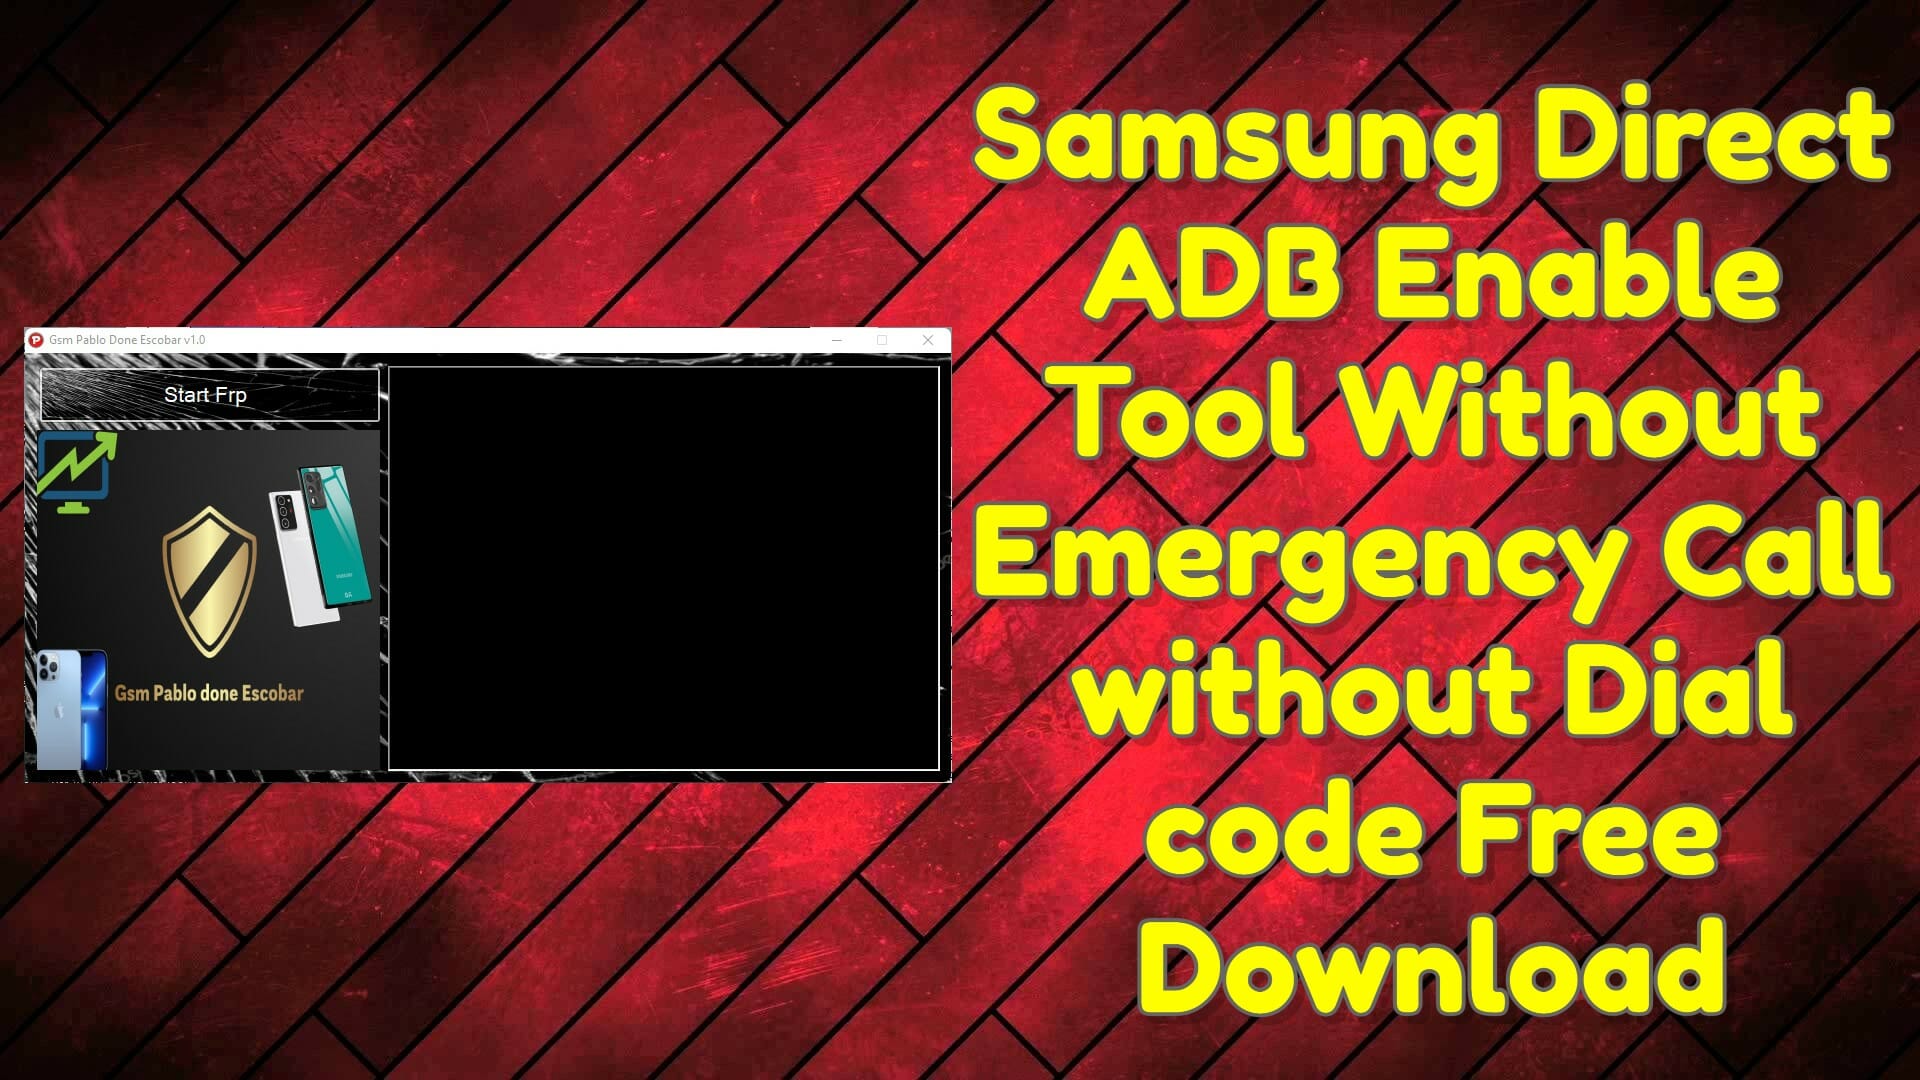 samsung adb enable tool download